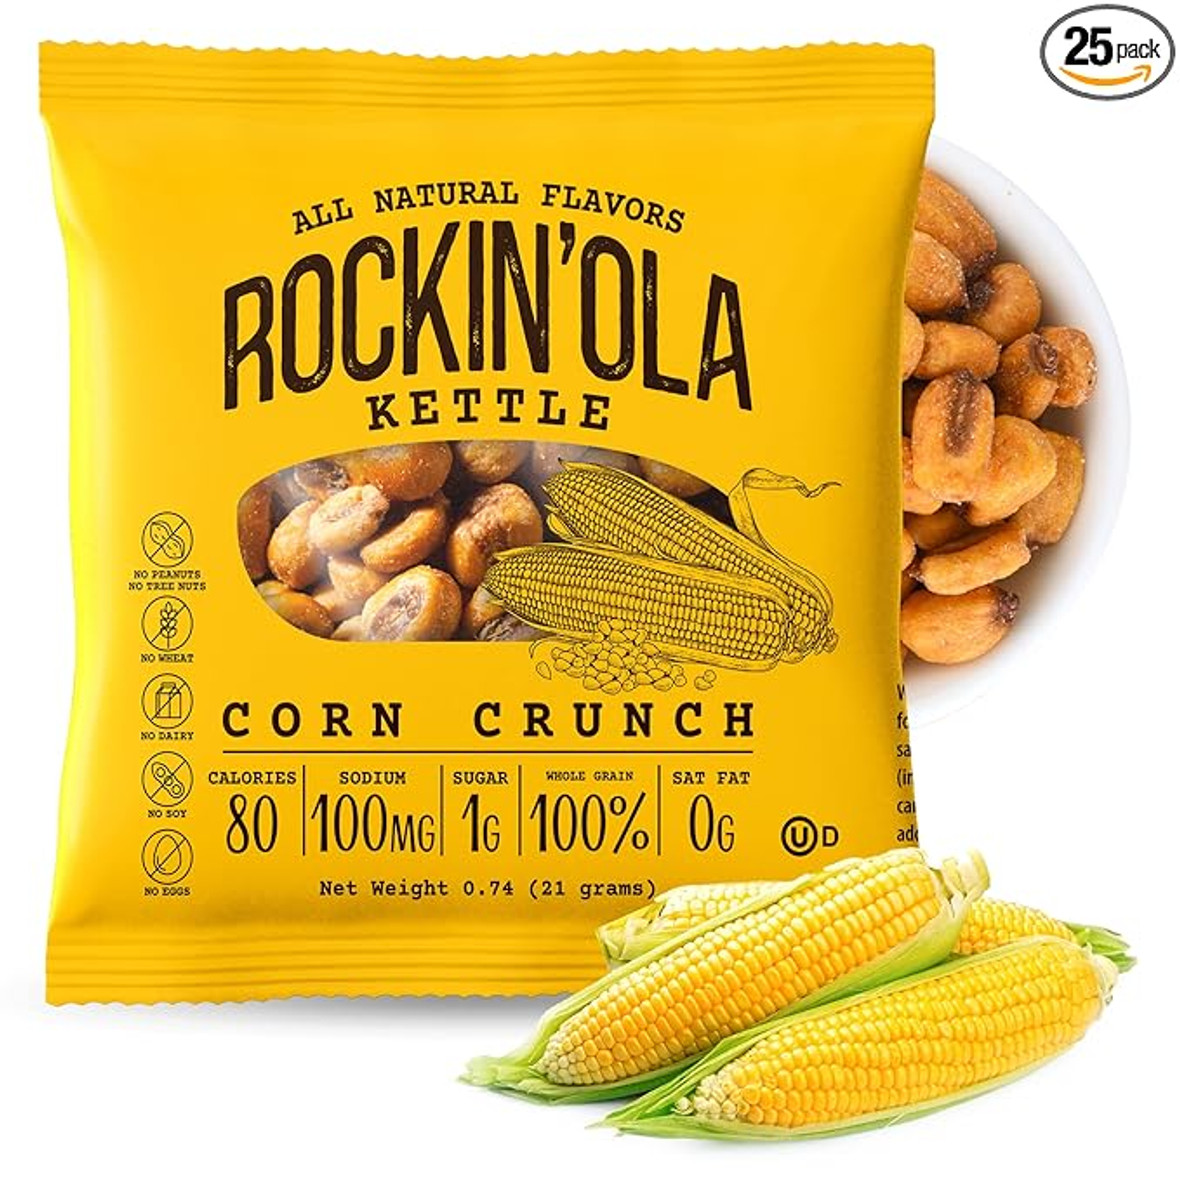 Rockin ola Kettle Corn Crunch, 2 Pound, 4 per case